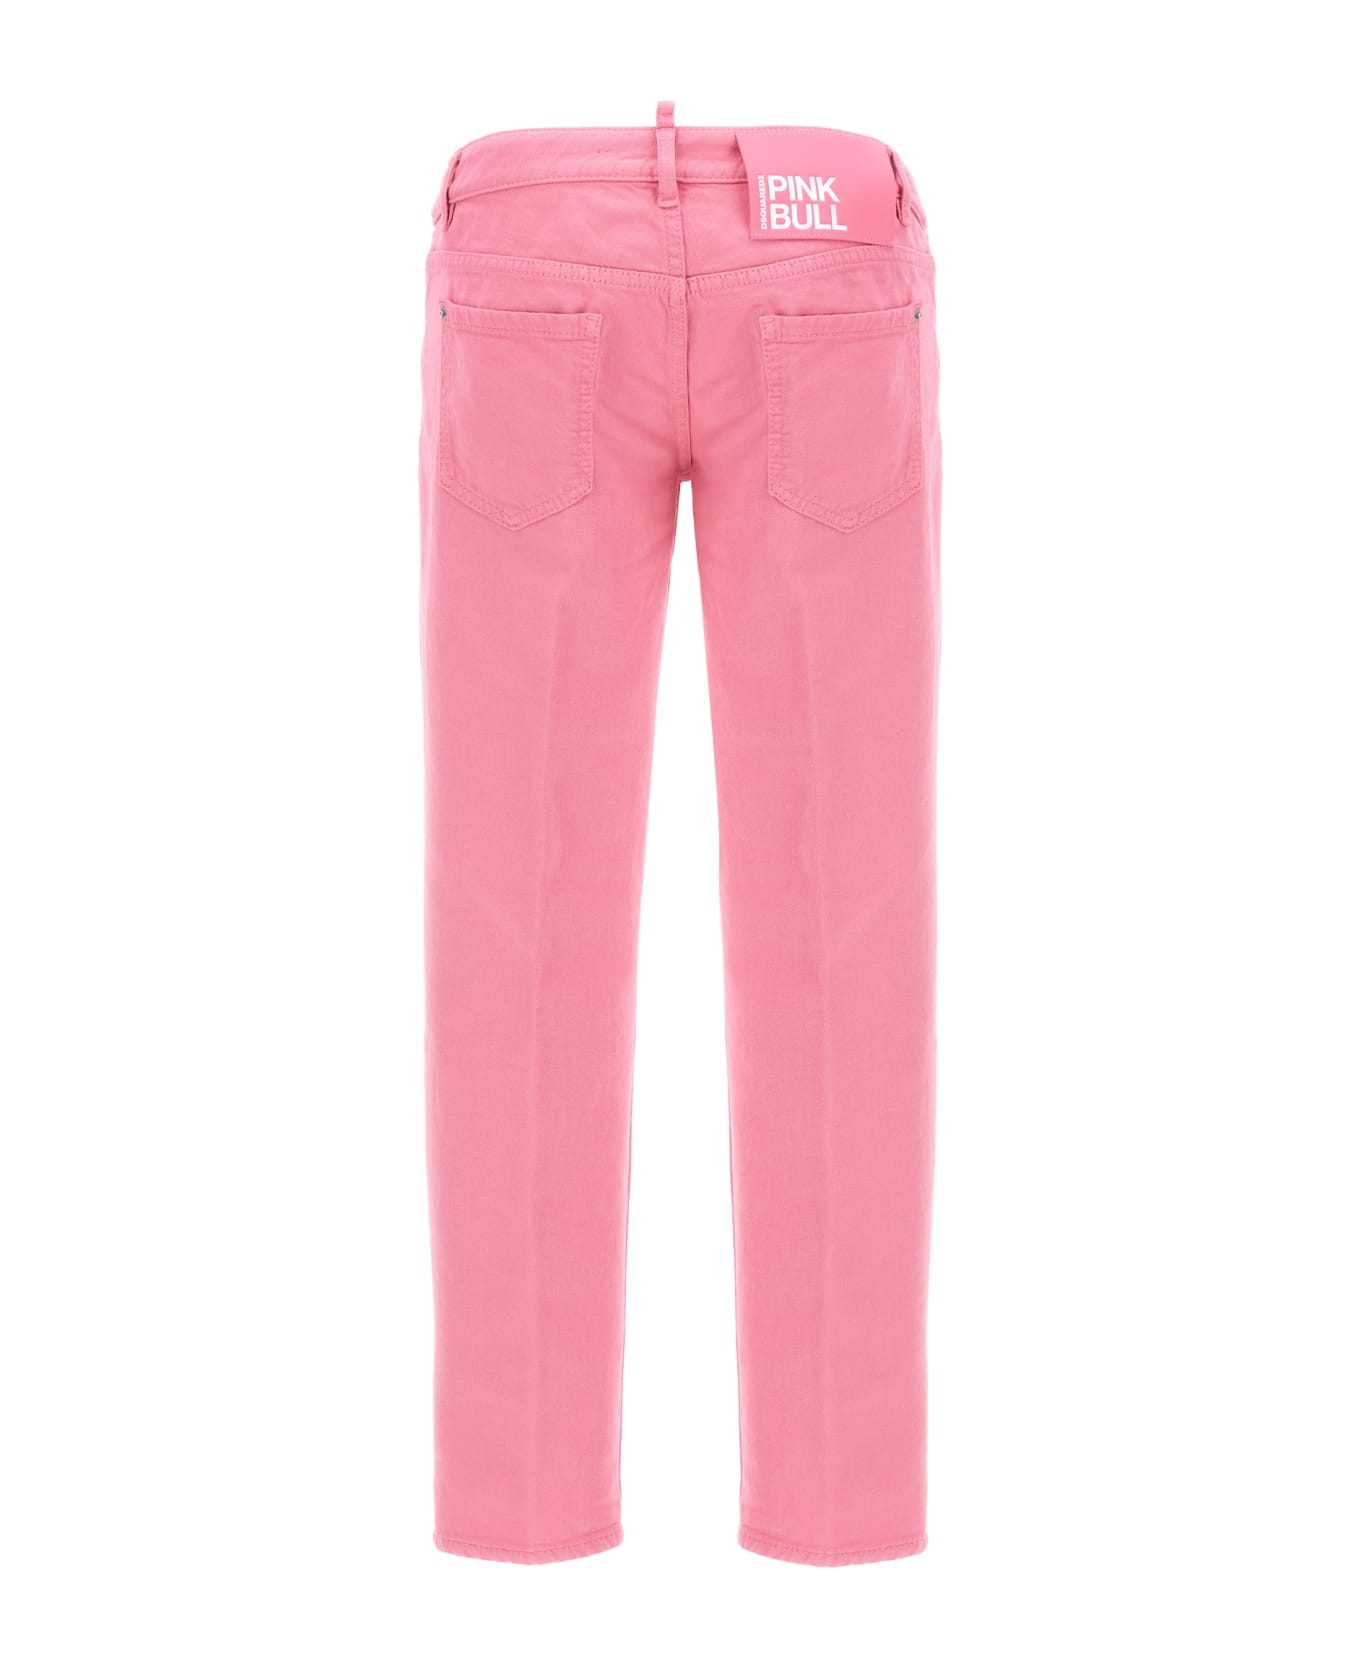 Dsquared2 Jennifer Jeans - Pink ボトムス